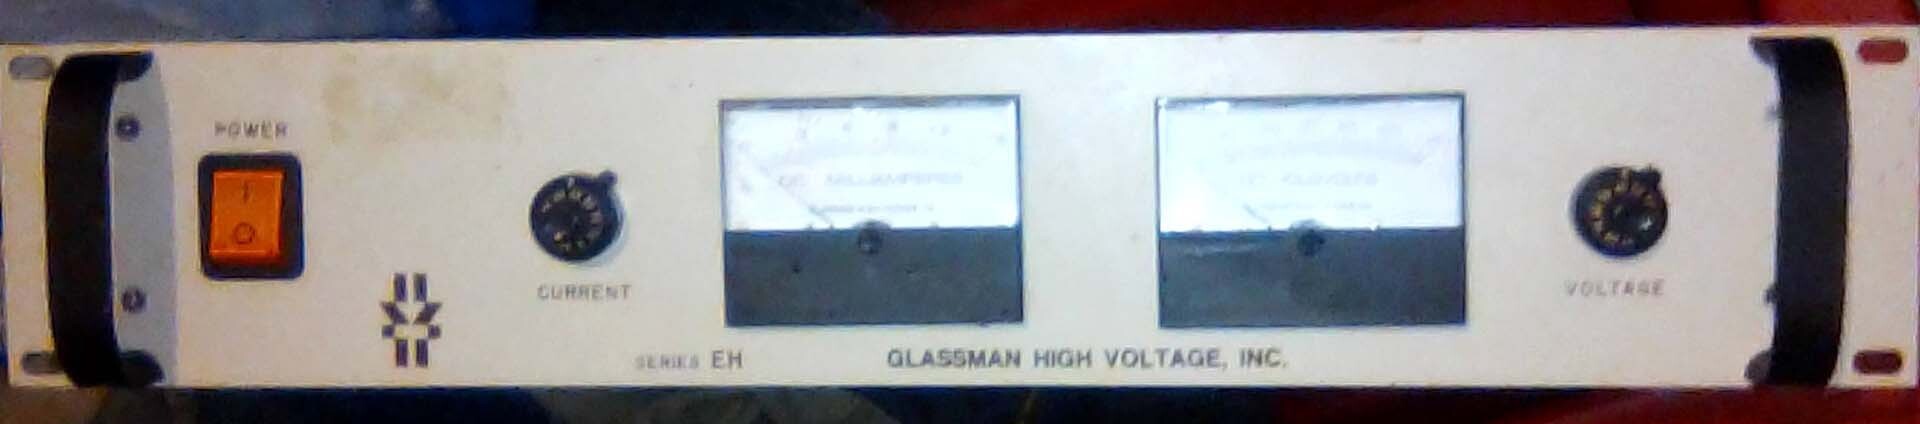 图为 已使用的 GLASSMAN HIGH VOLTAGE INC. PS / EH 60R01.5 待售